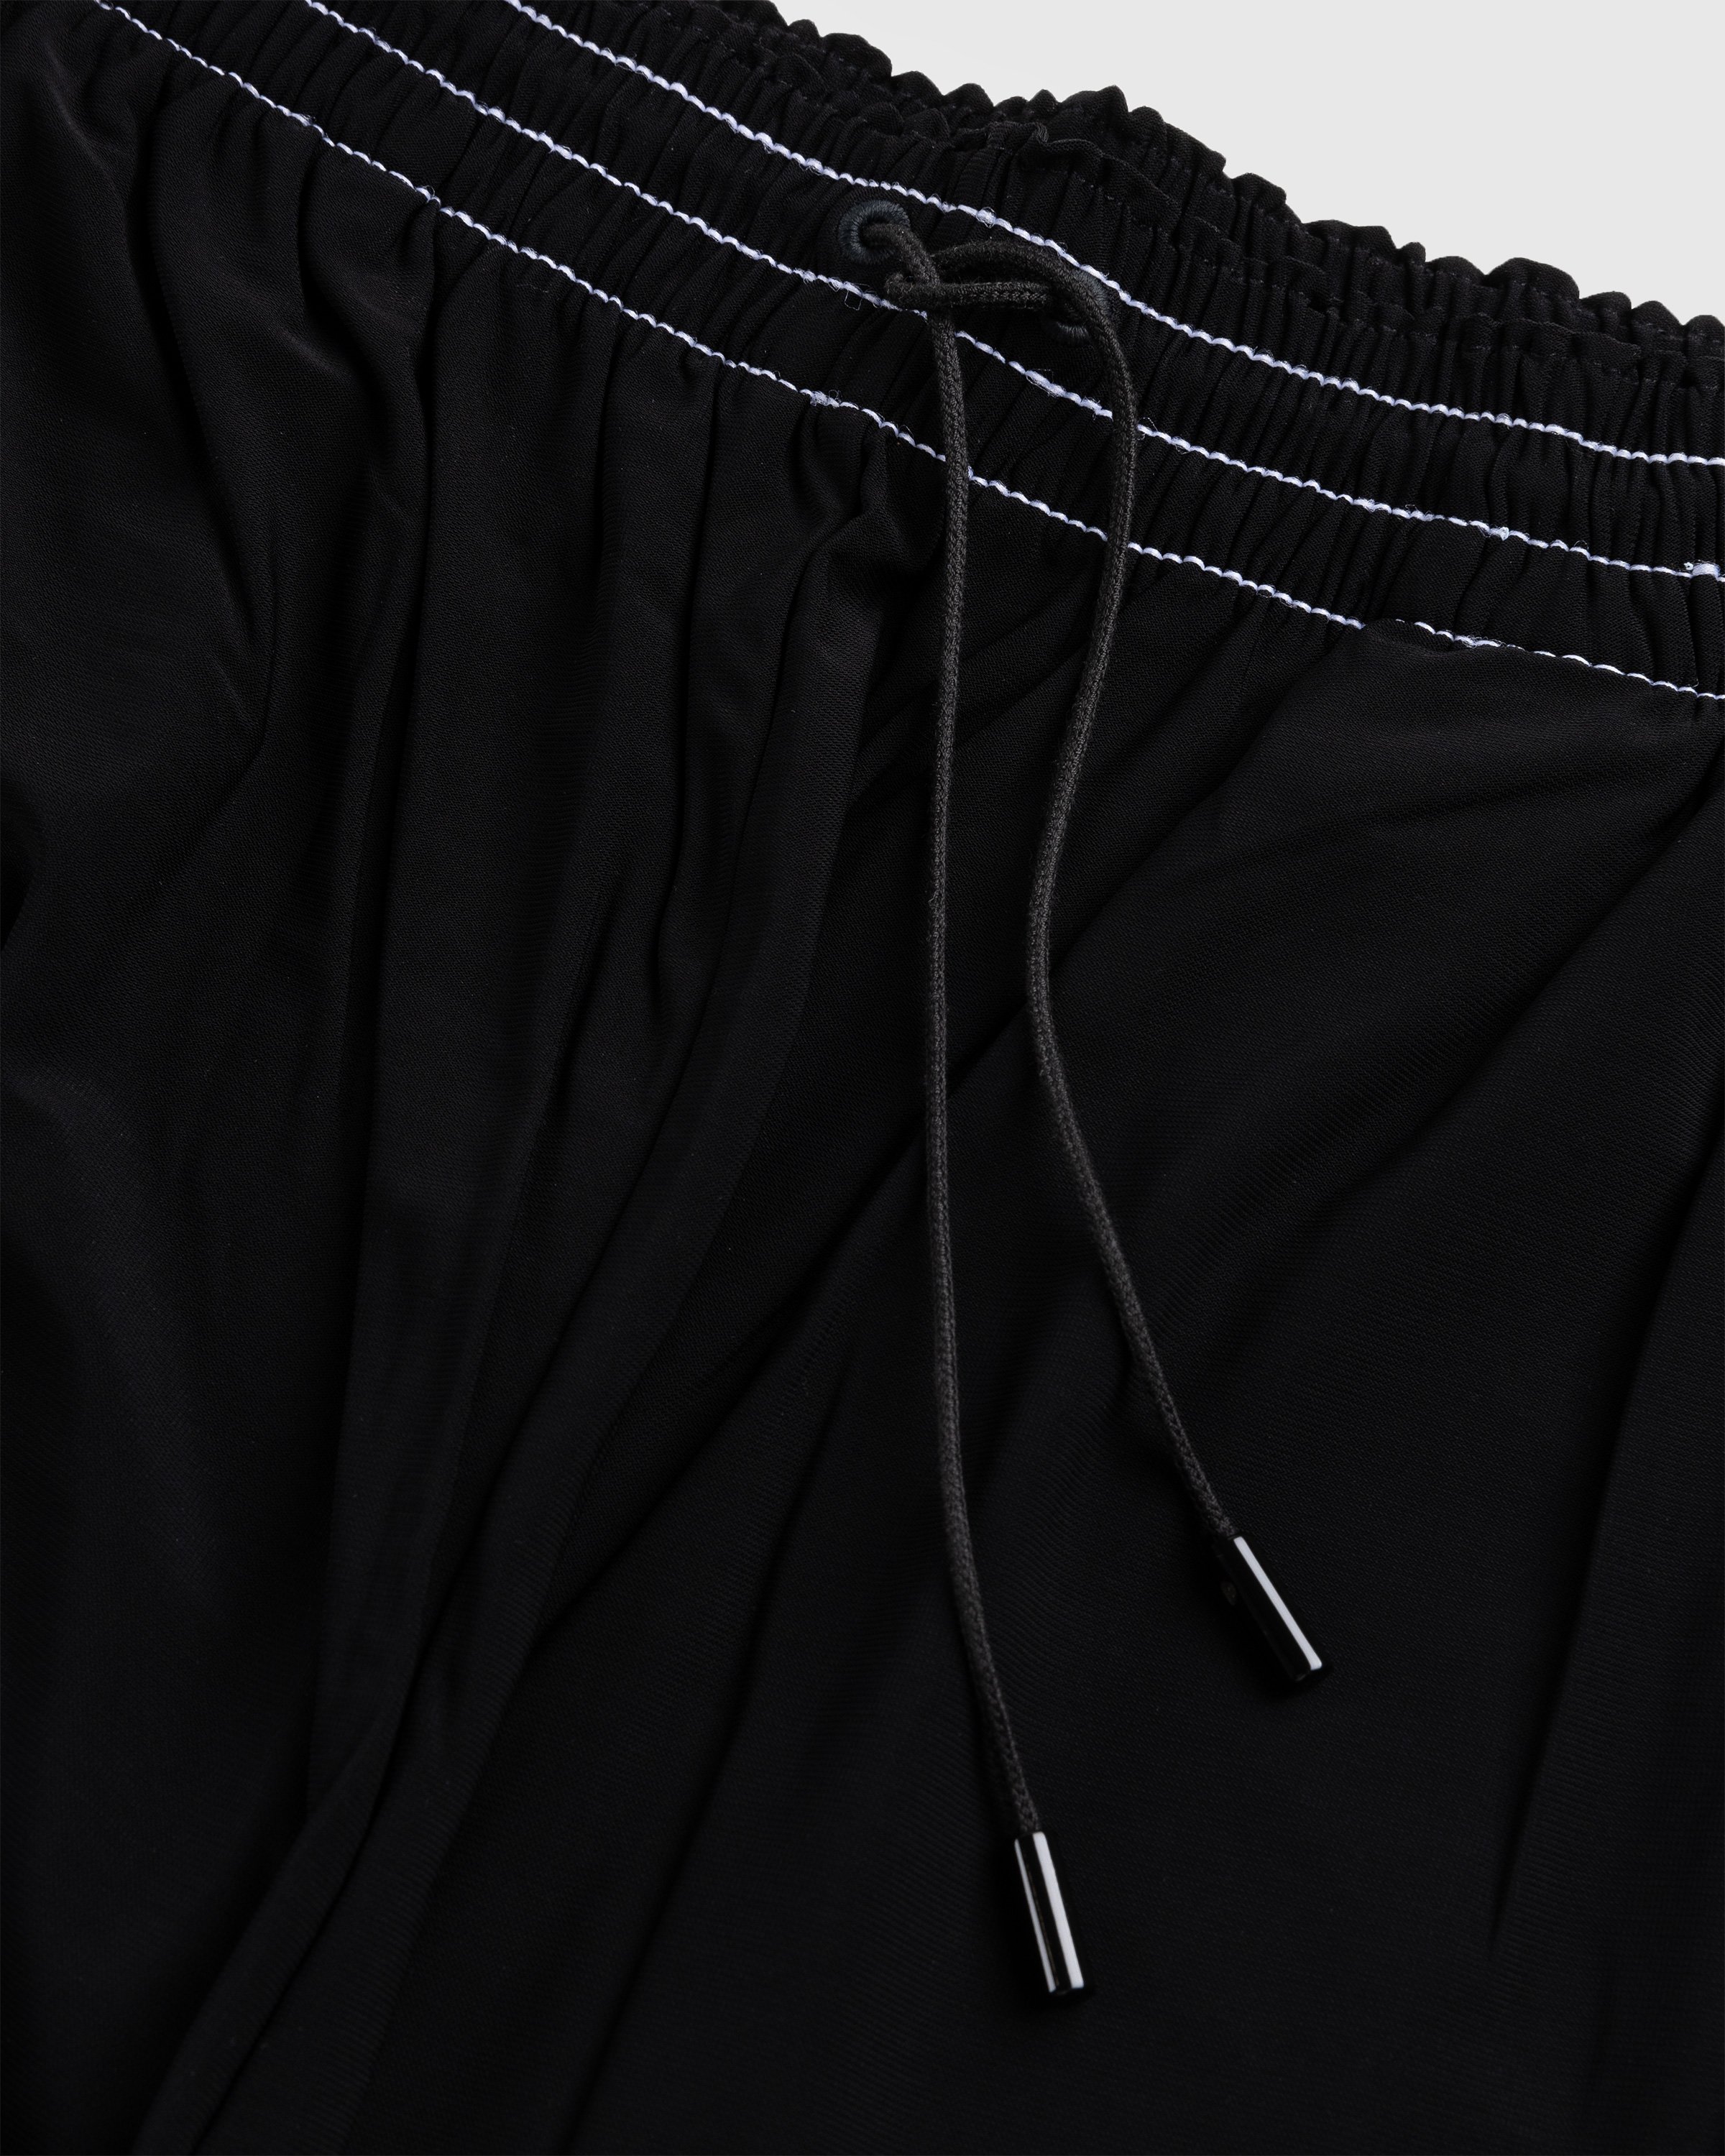 Marine Serre - Fluid Jersey Baggy Pants Black - Clothing - undefined - Image 7